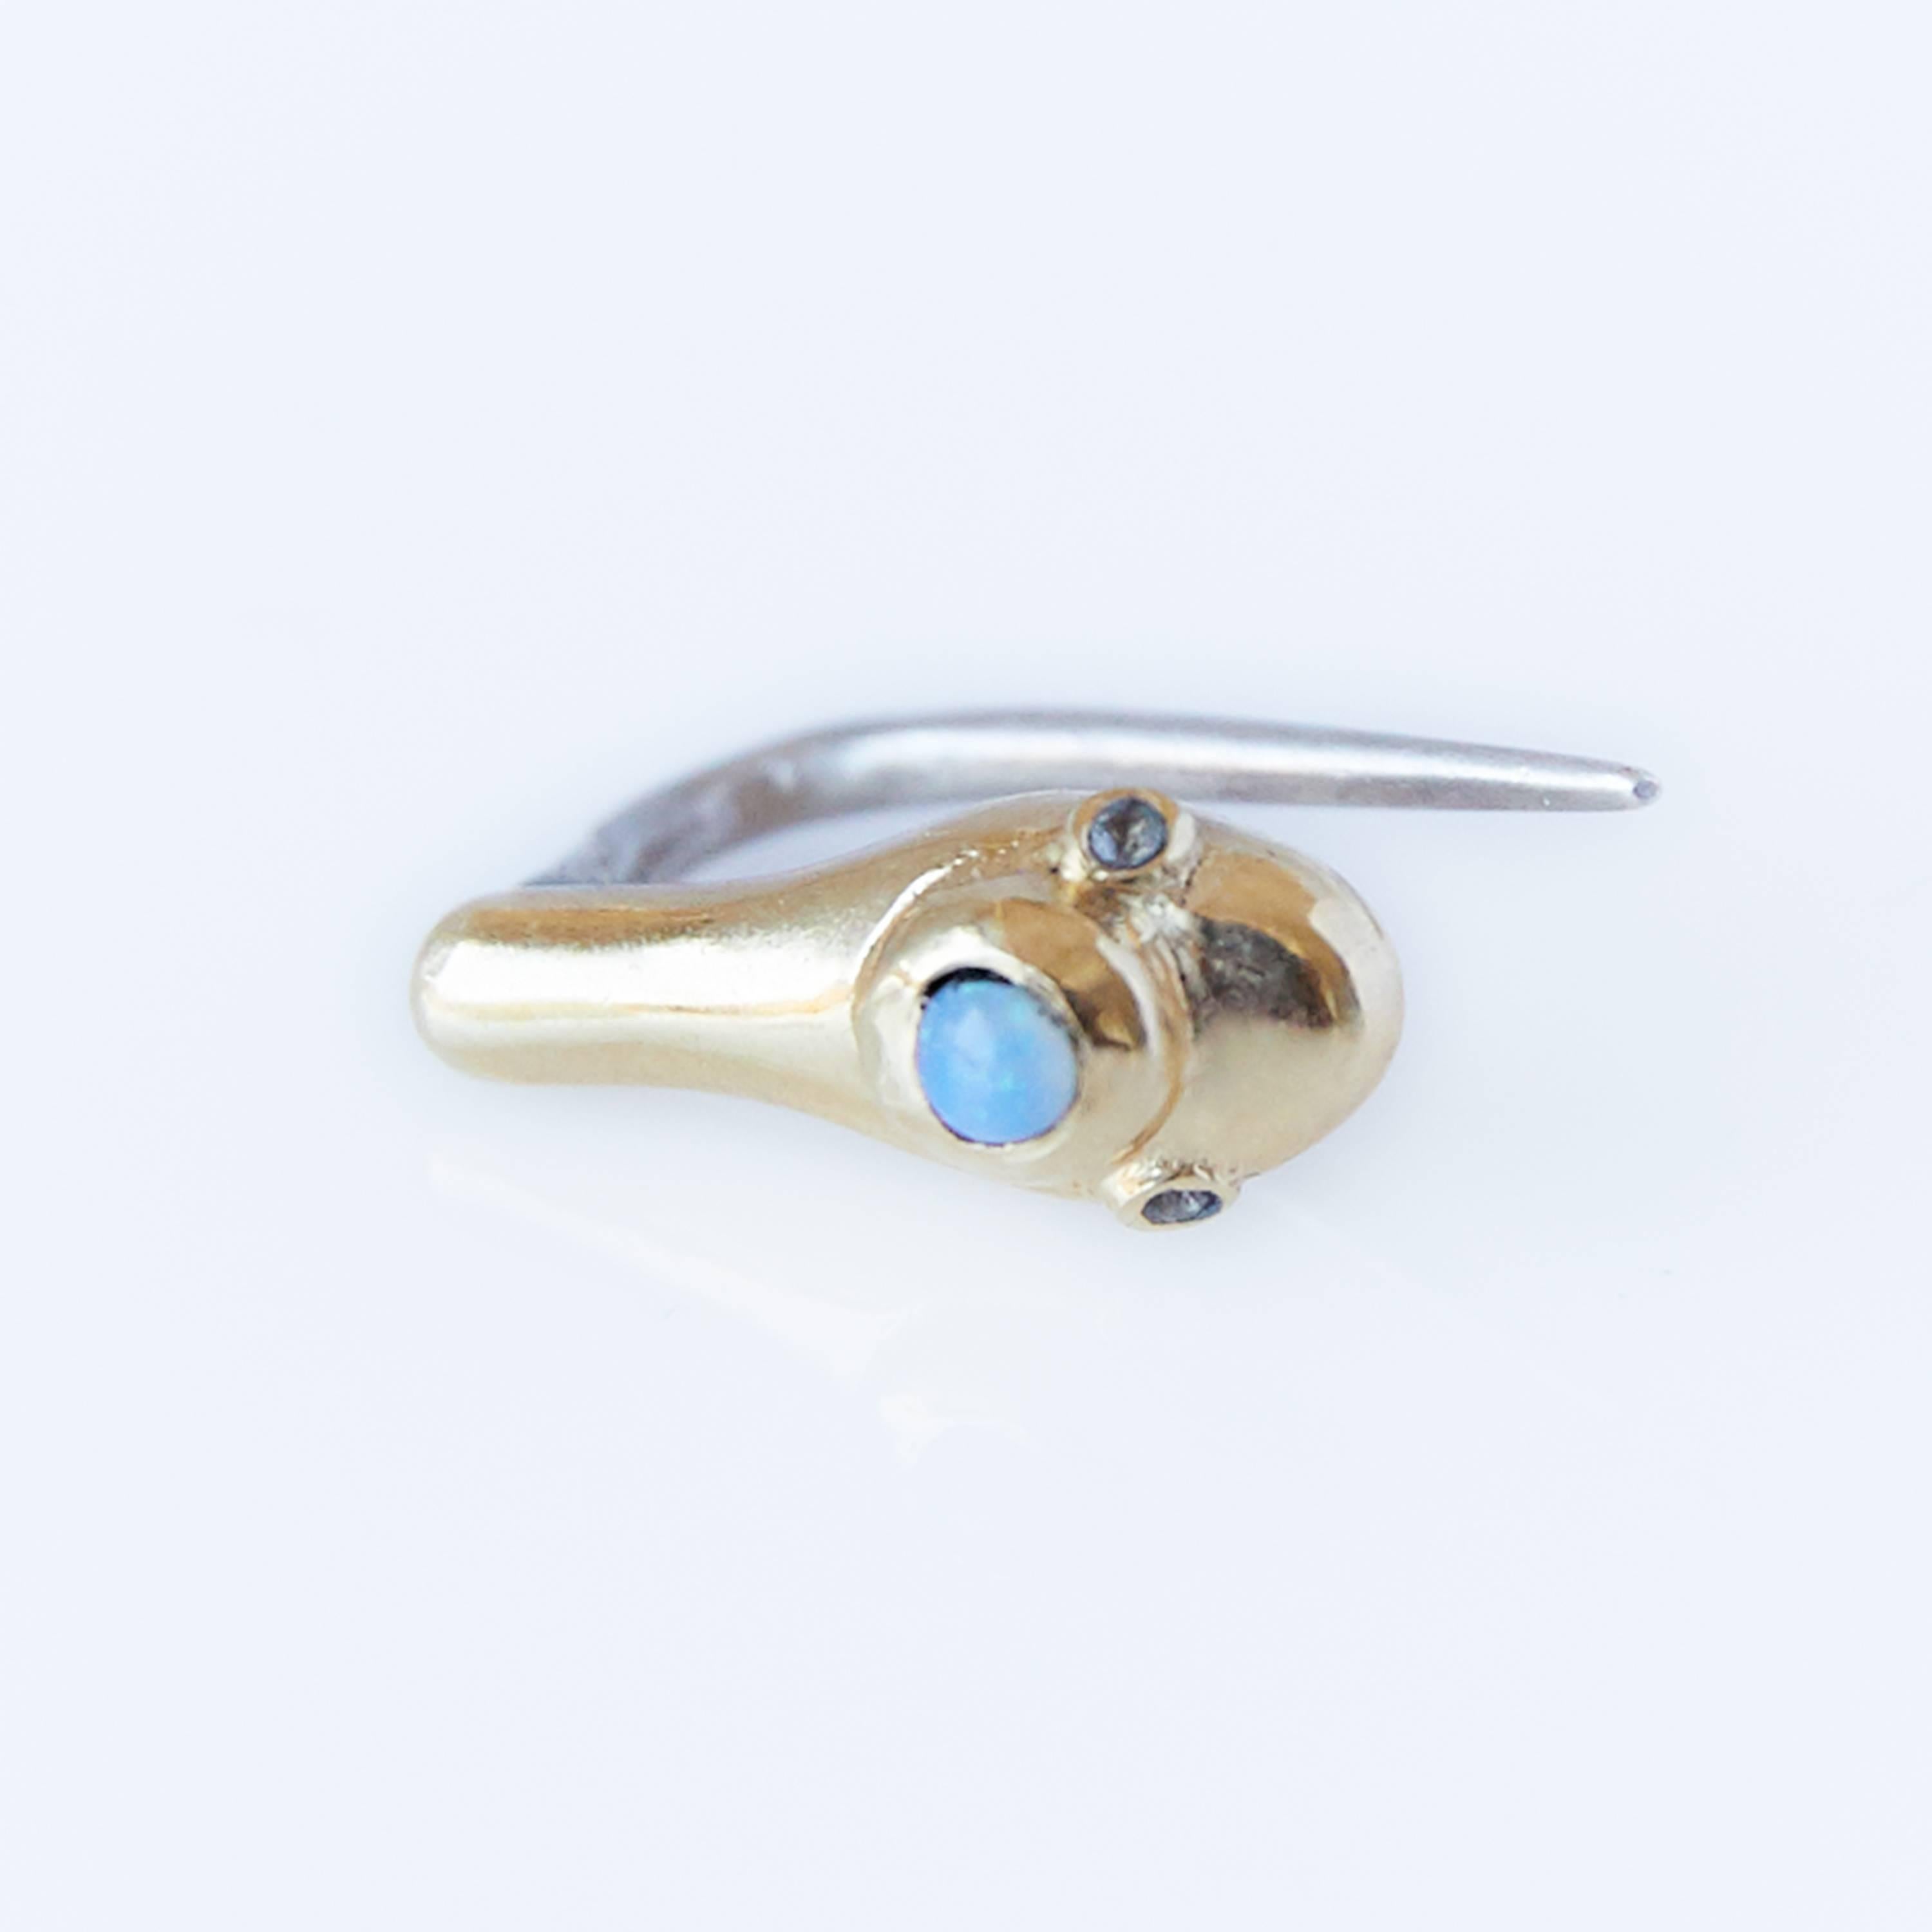 Opal White Diamond Snake Earring 14k Gold J Dauphin

J DAUPHIN 